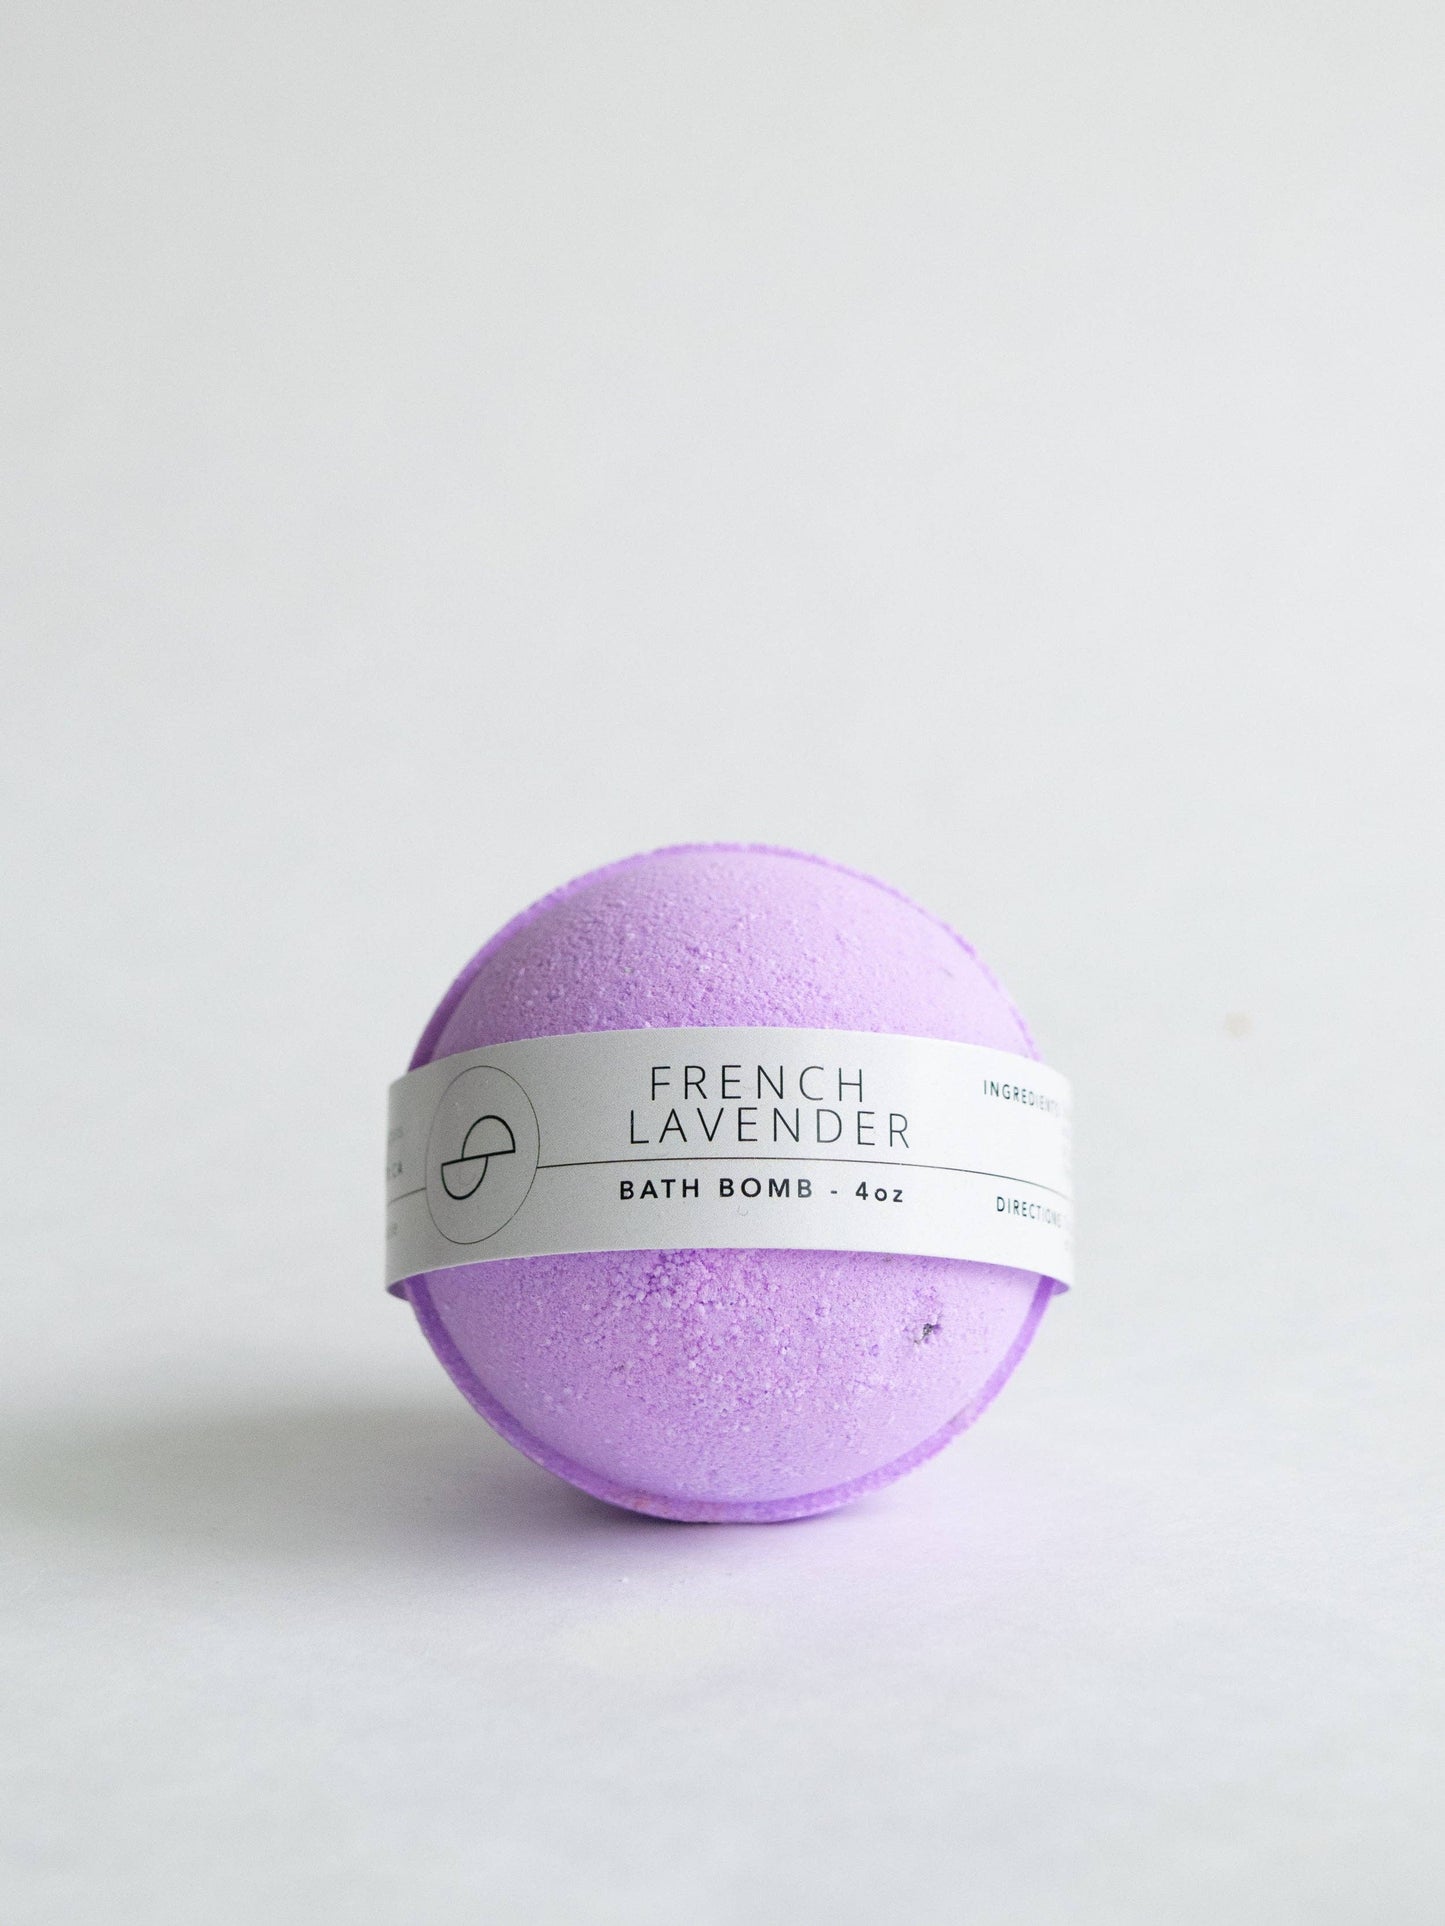 Lend Me Some Sugar Bath Company - French Lavender Bath Bomb